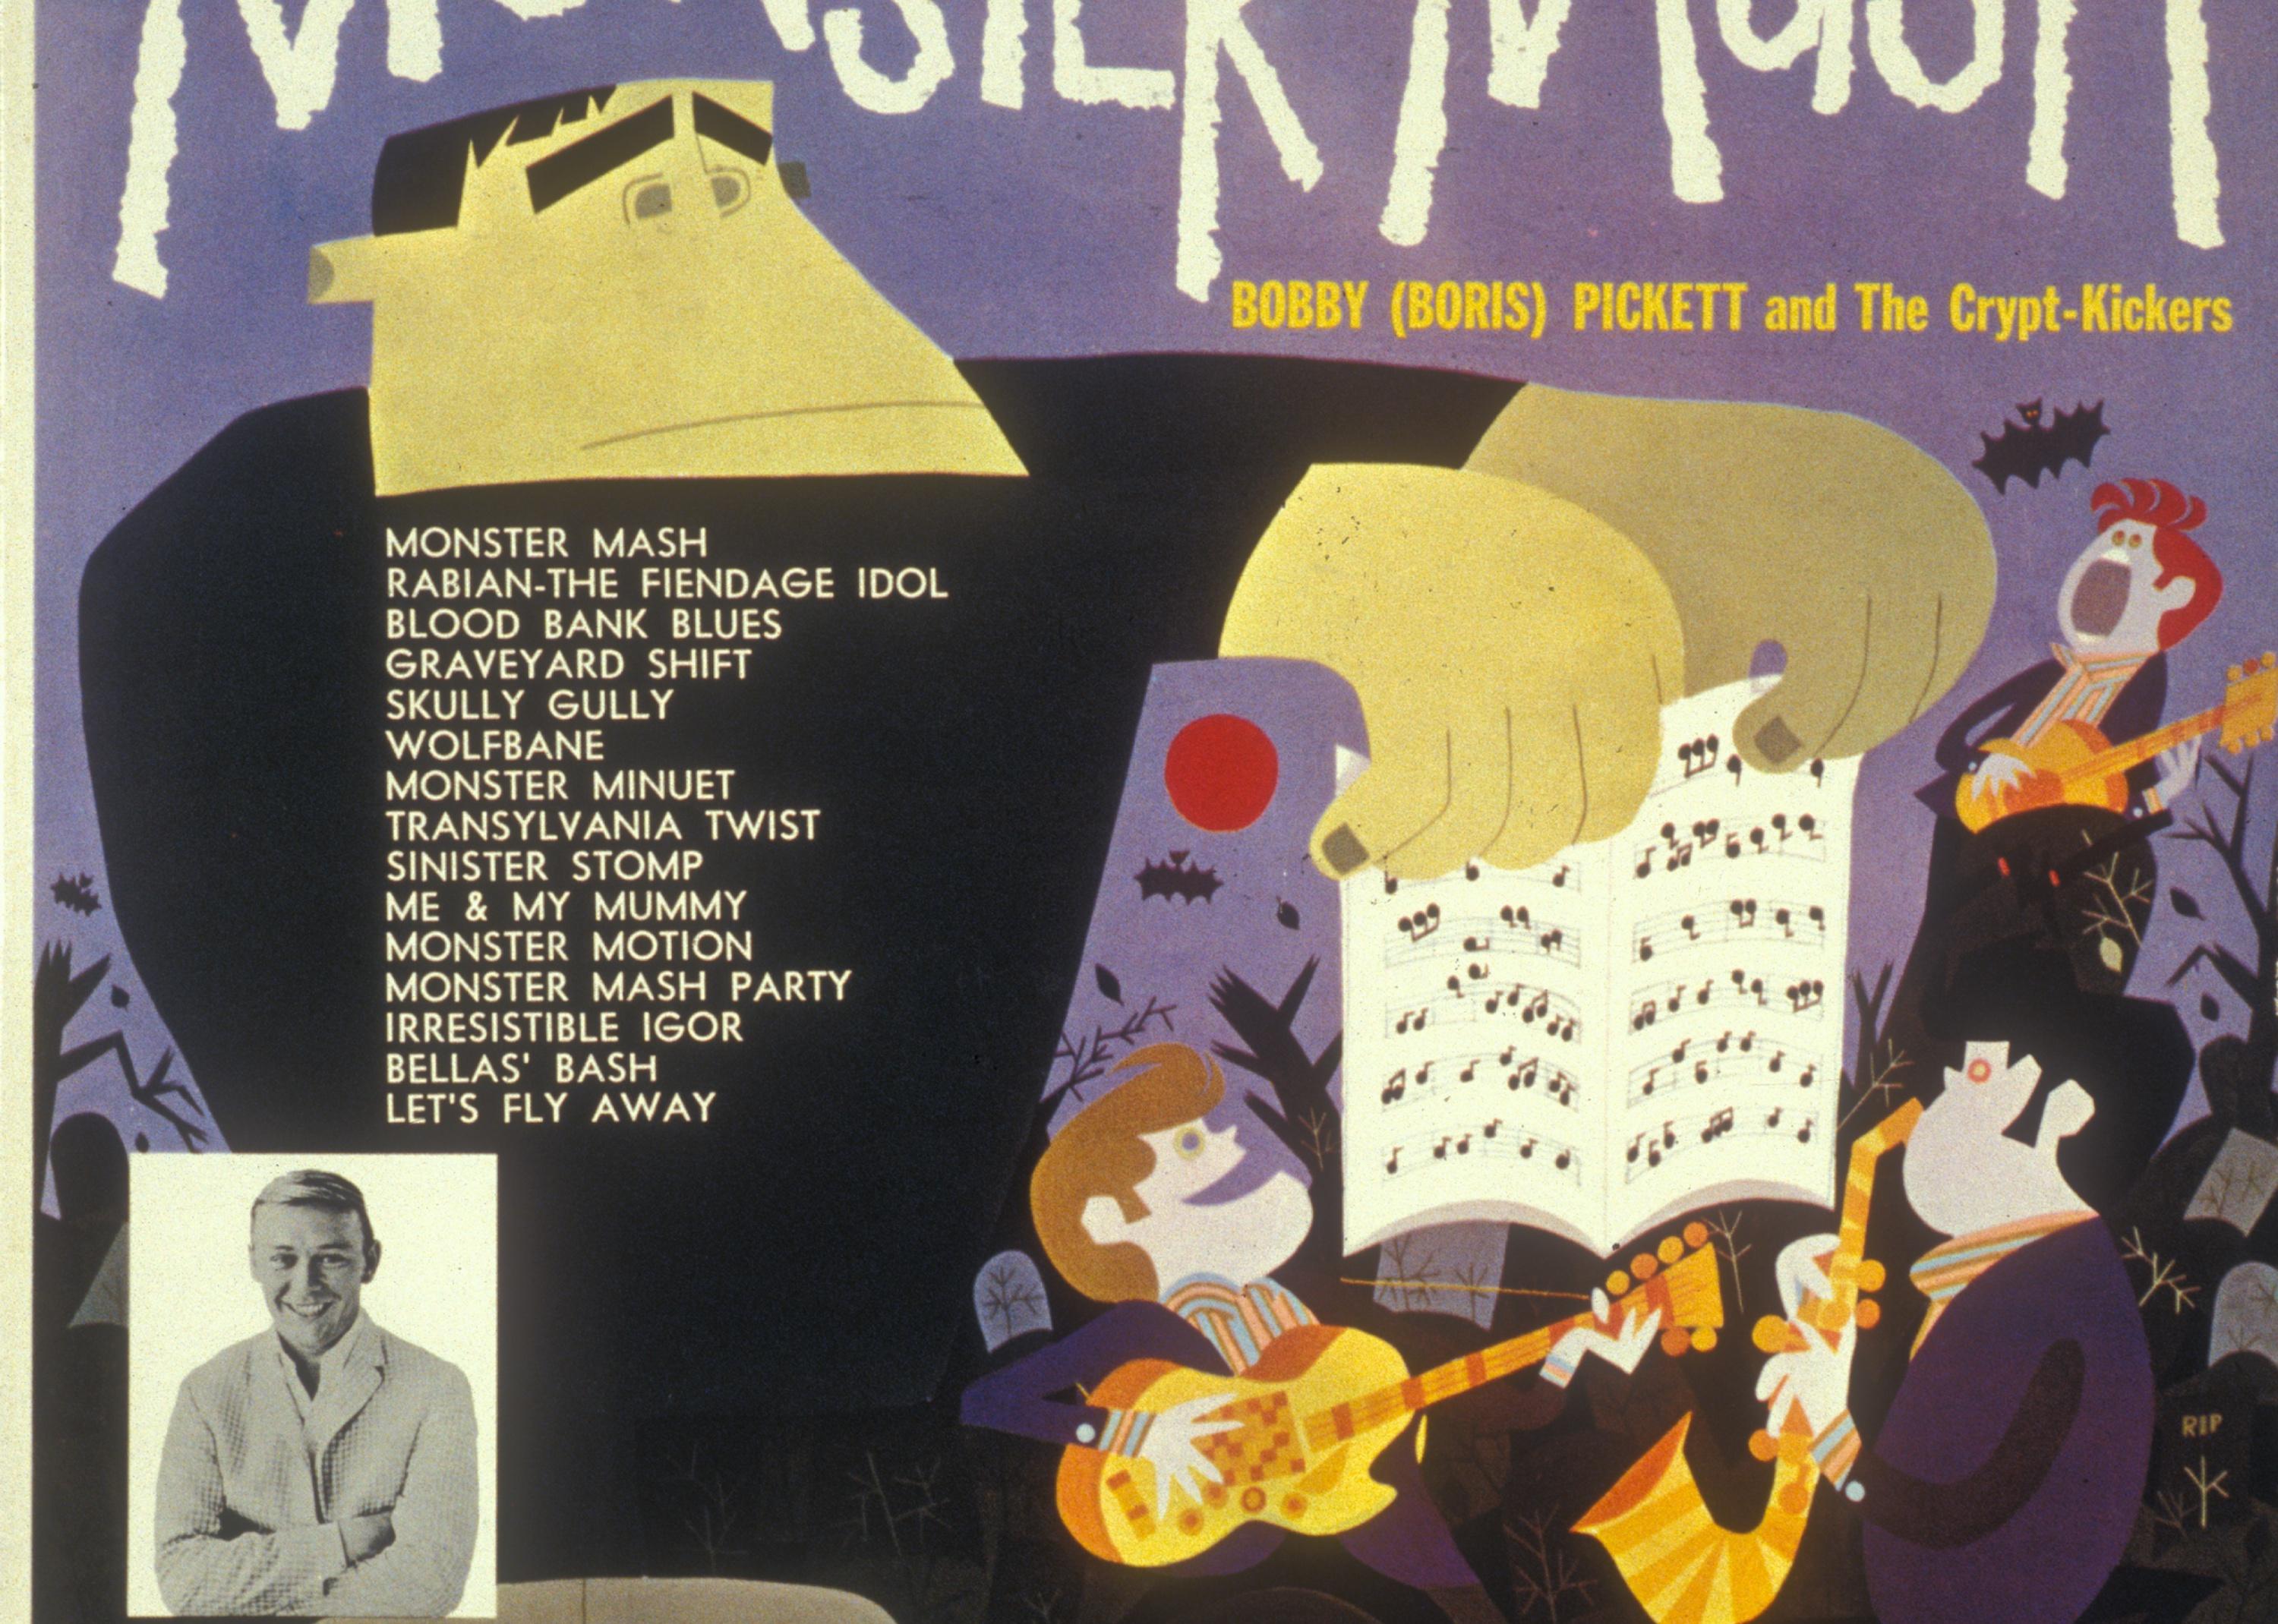 Monster Mash album cover featuring Bobby Pickett.